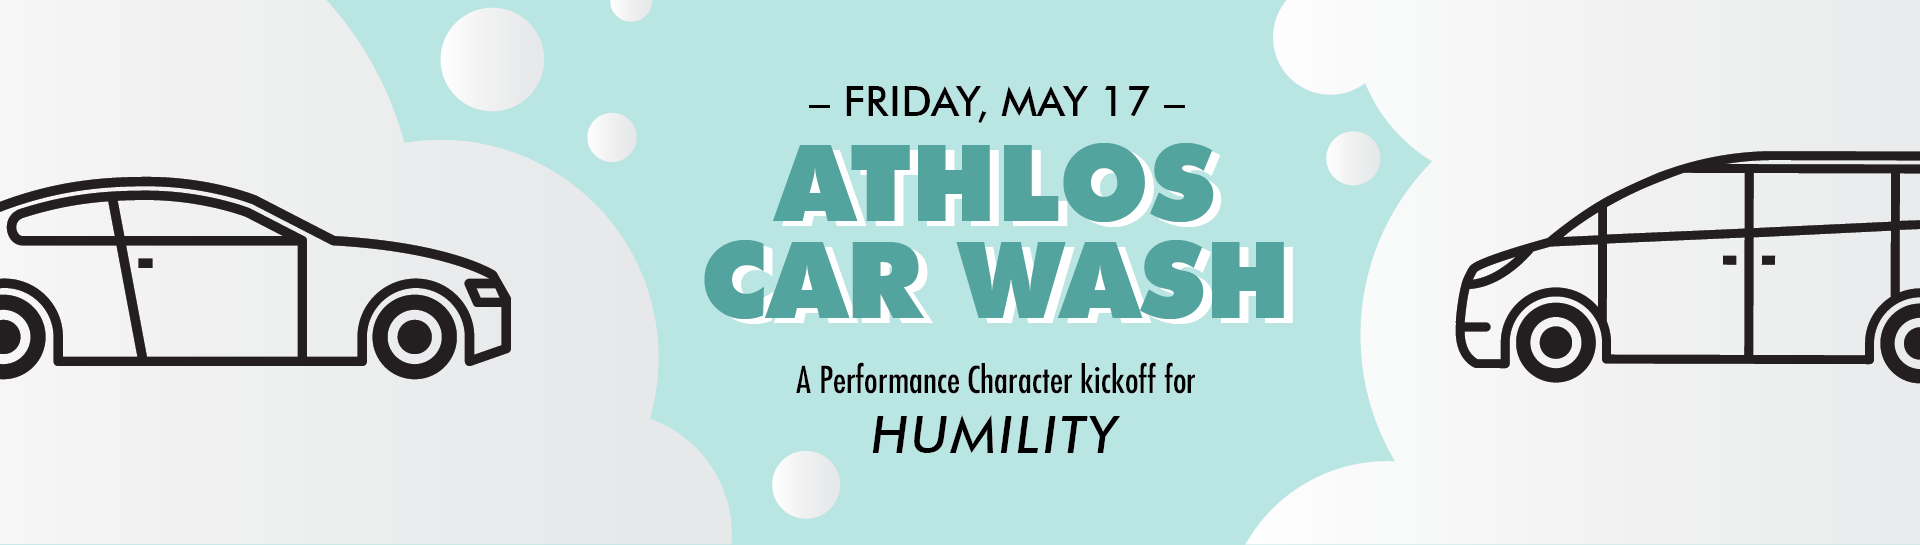 Athlos Car Wash